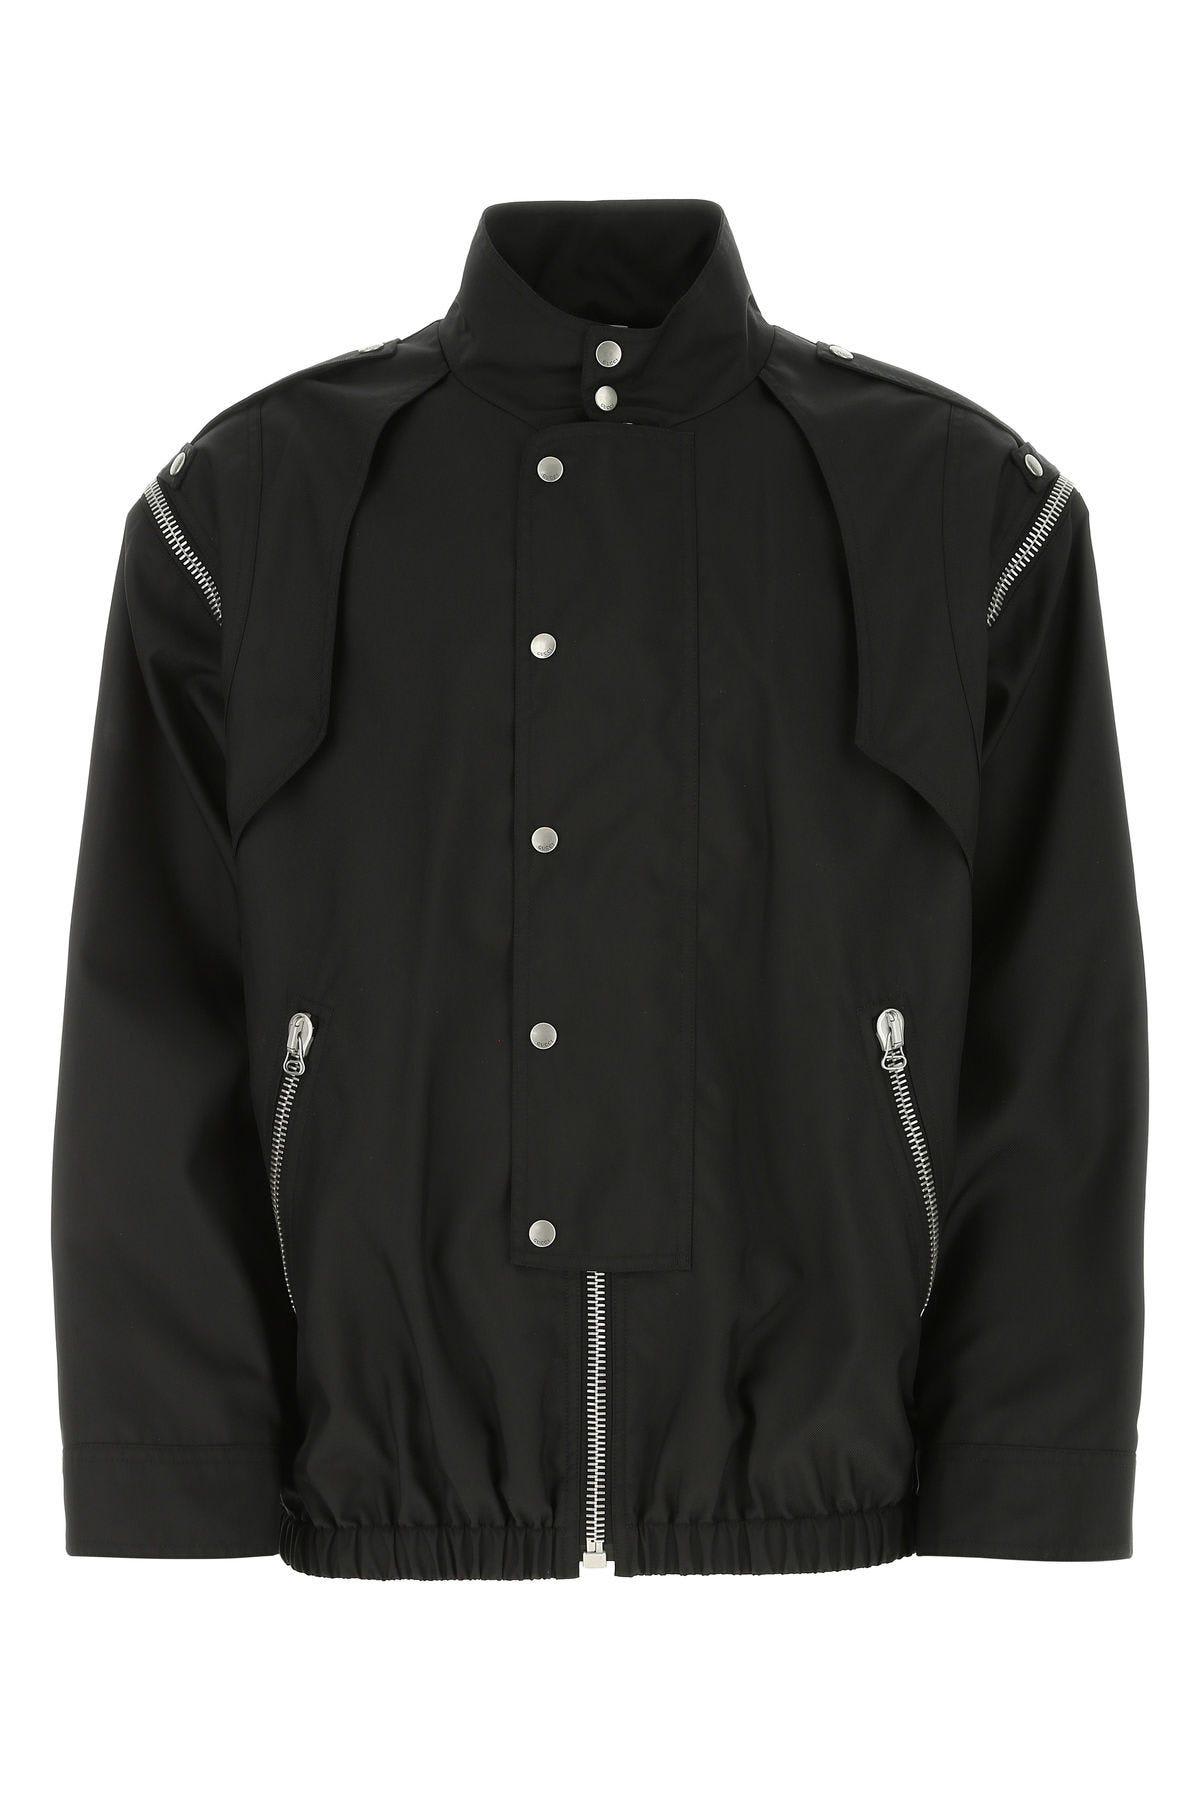 Gucci Black Nylon Jacket